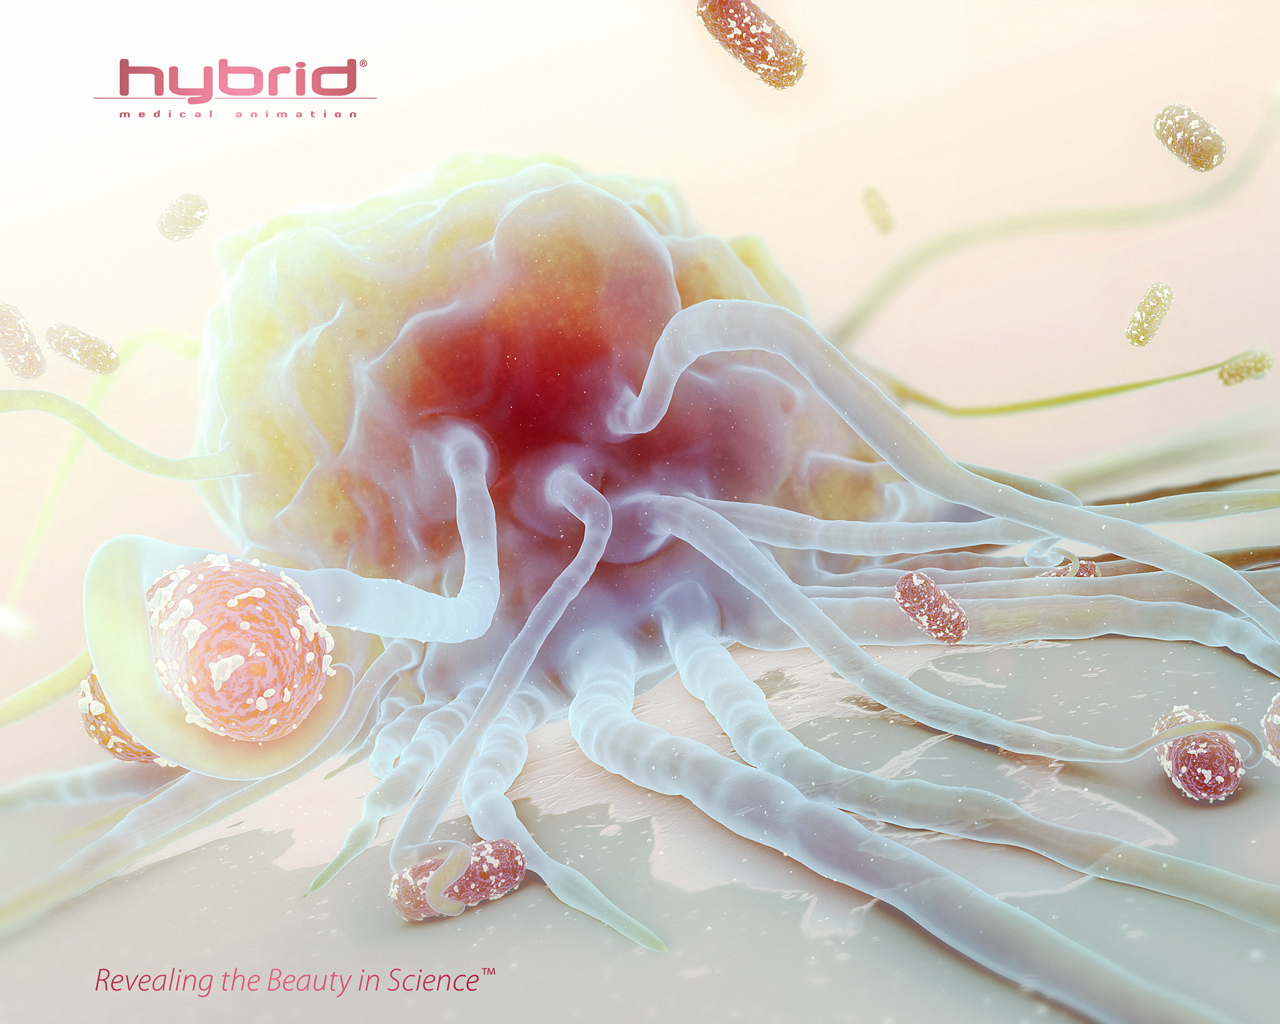 Hybrid Medical Animation   Hybrid Desktop Wallpapers